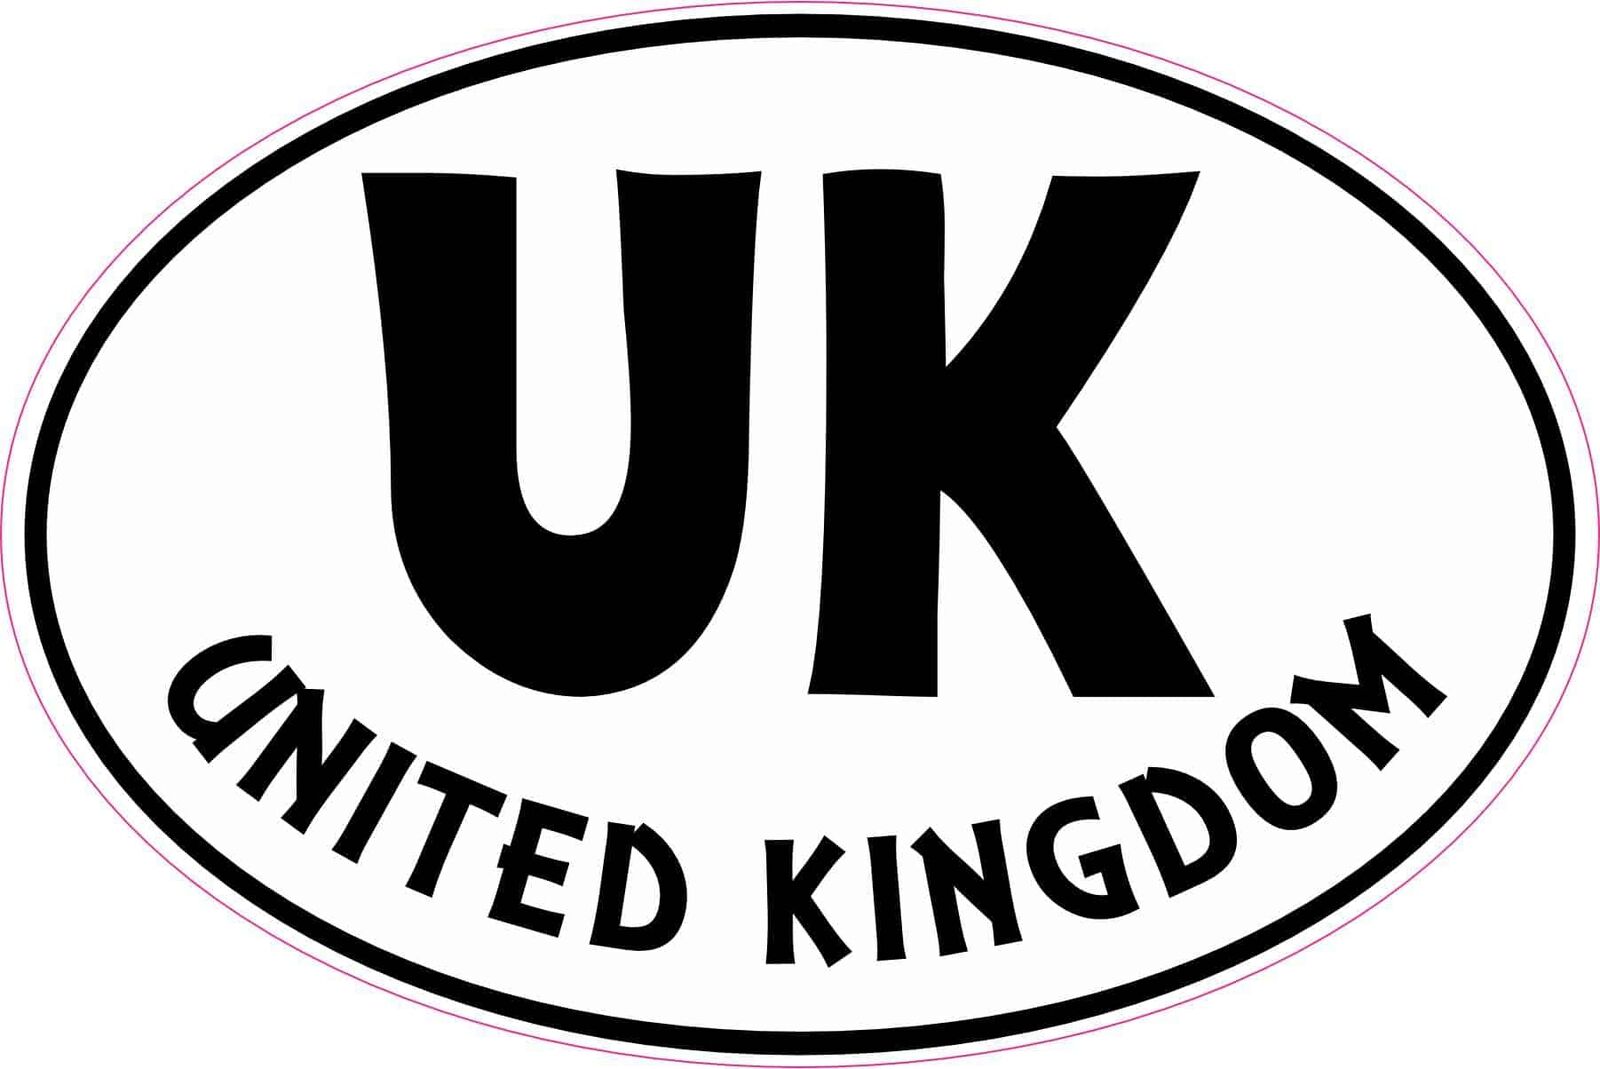 StickerTalk UK United Kingdom Travel Sticker, 6 inches x 4 inches